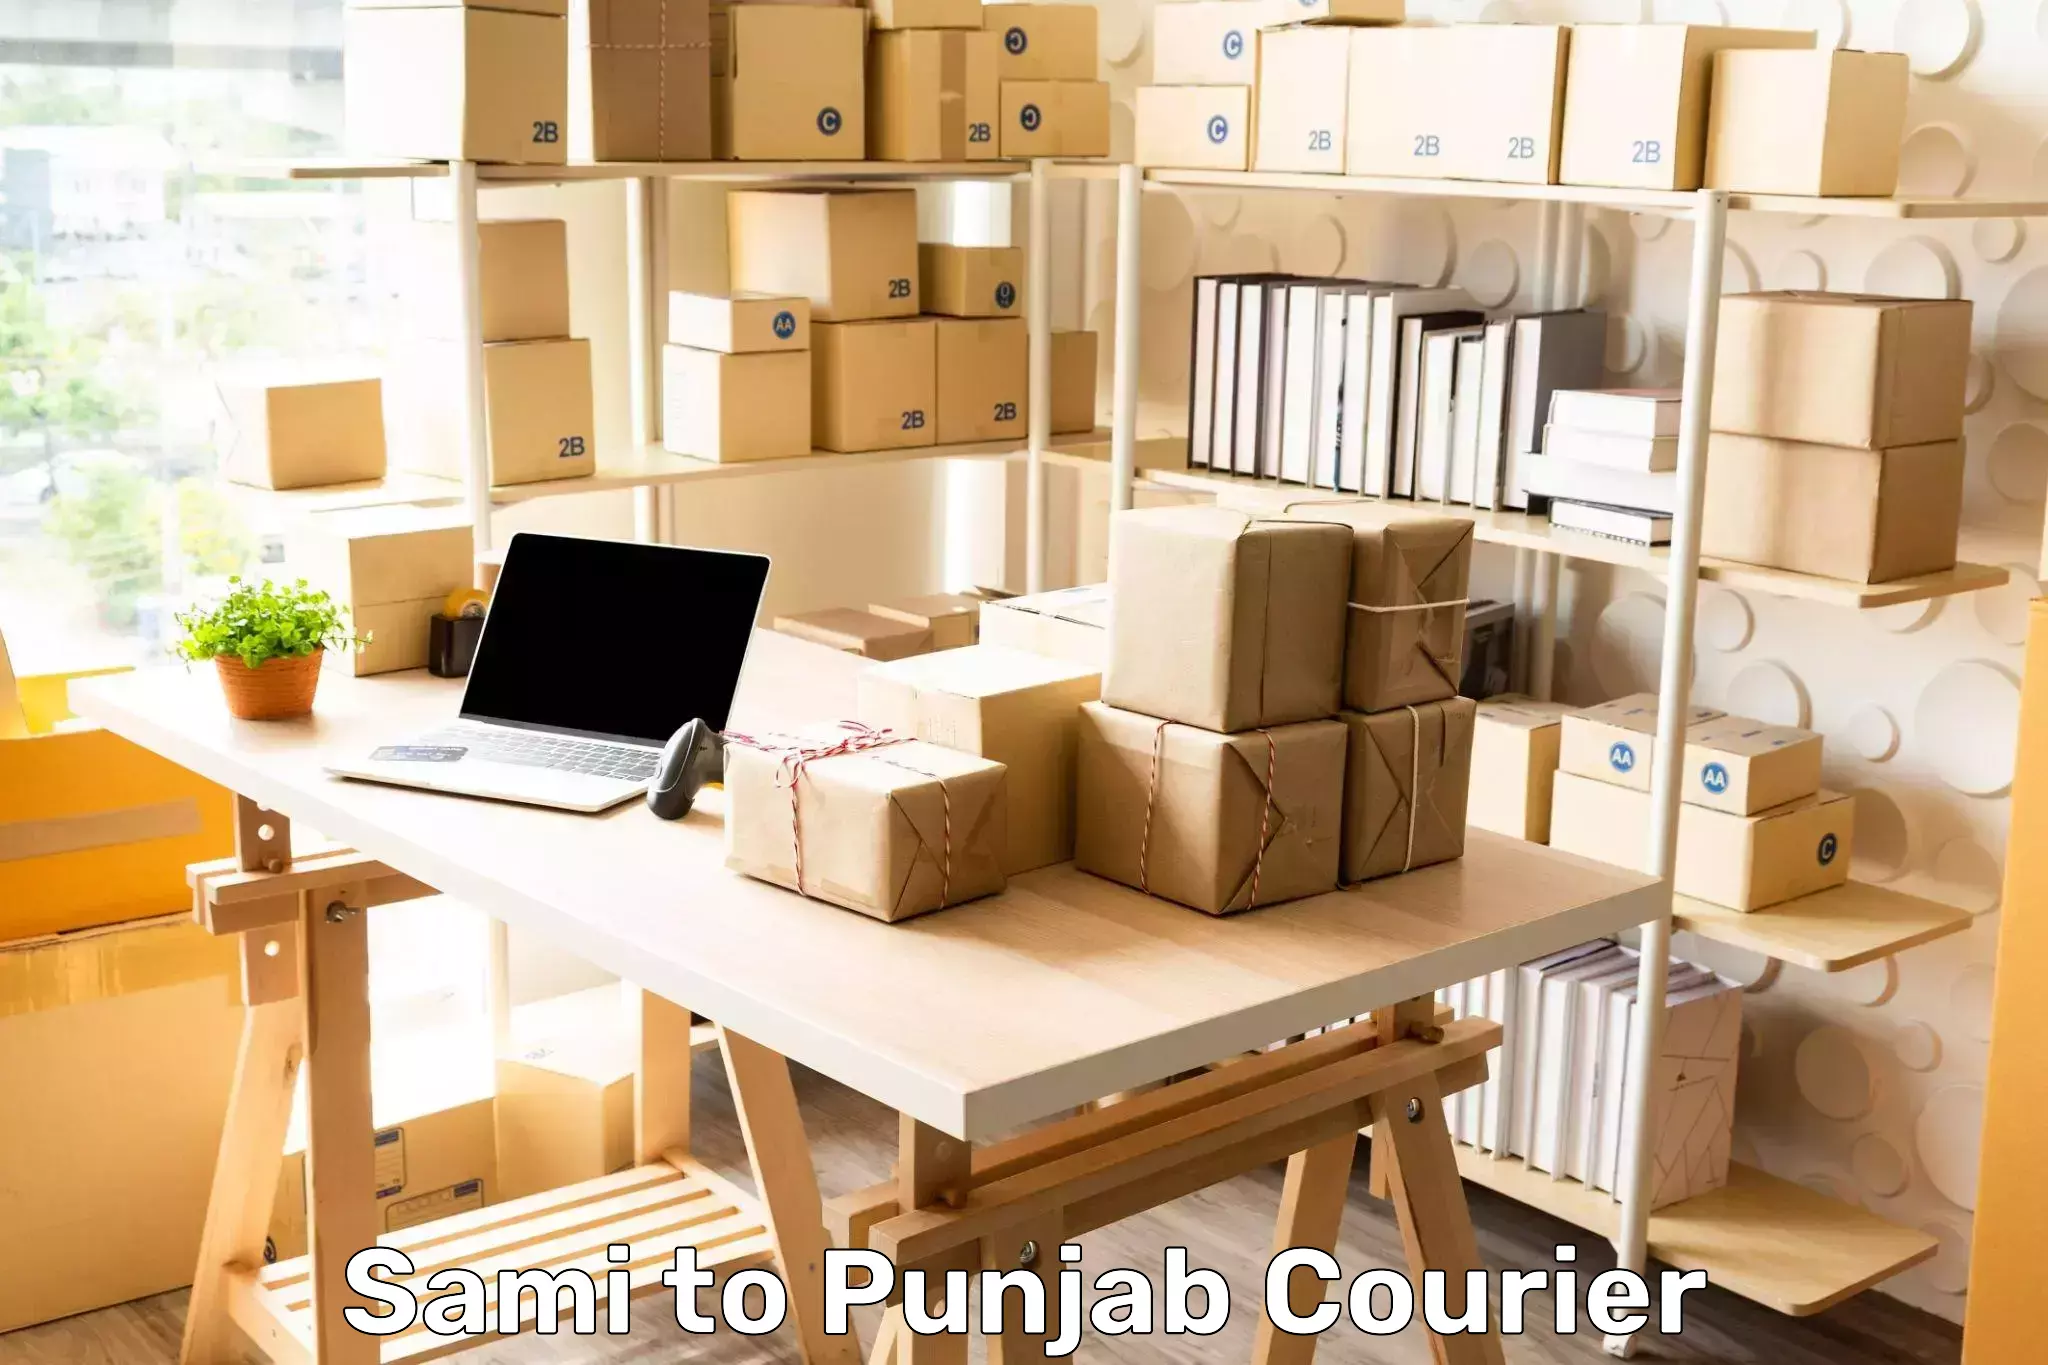 Custom courier packaging Sami to Punjab